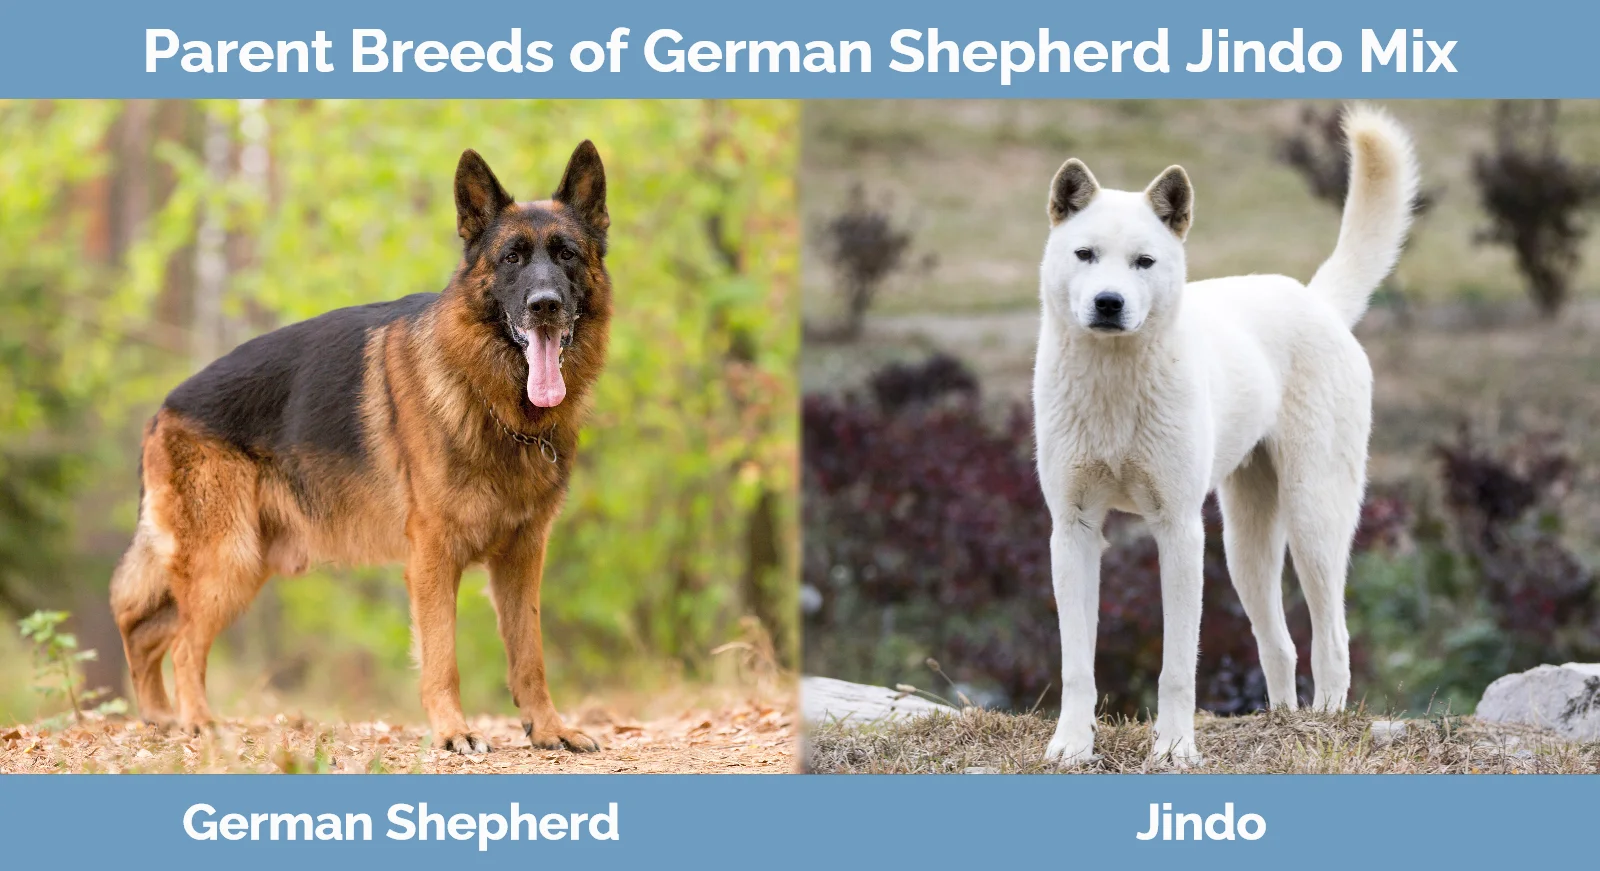 Parent breeds of German Shepherd Jindo Mix